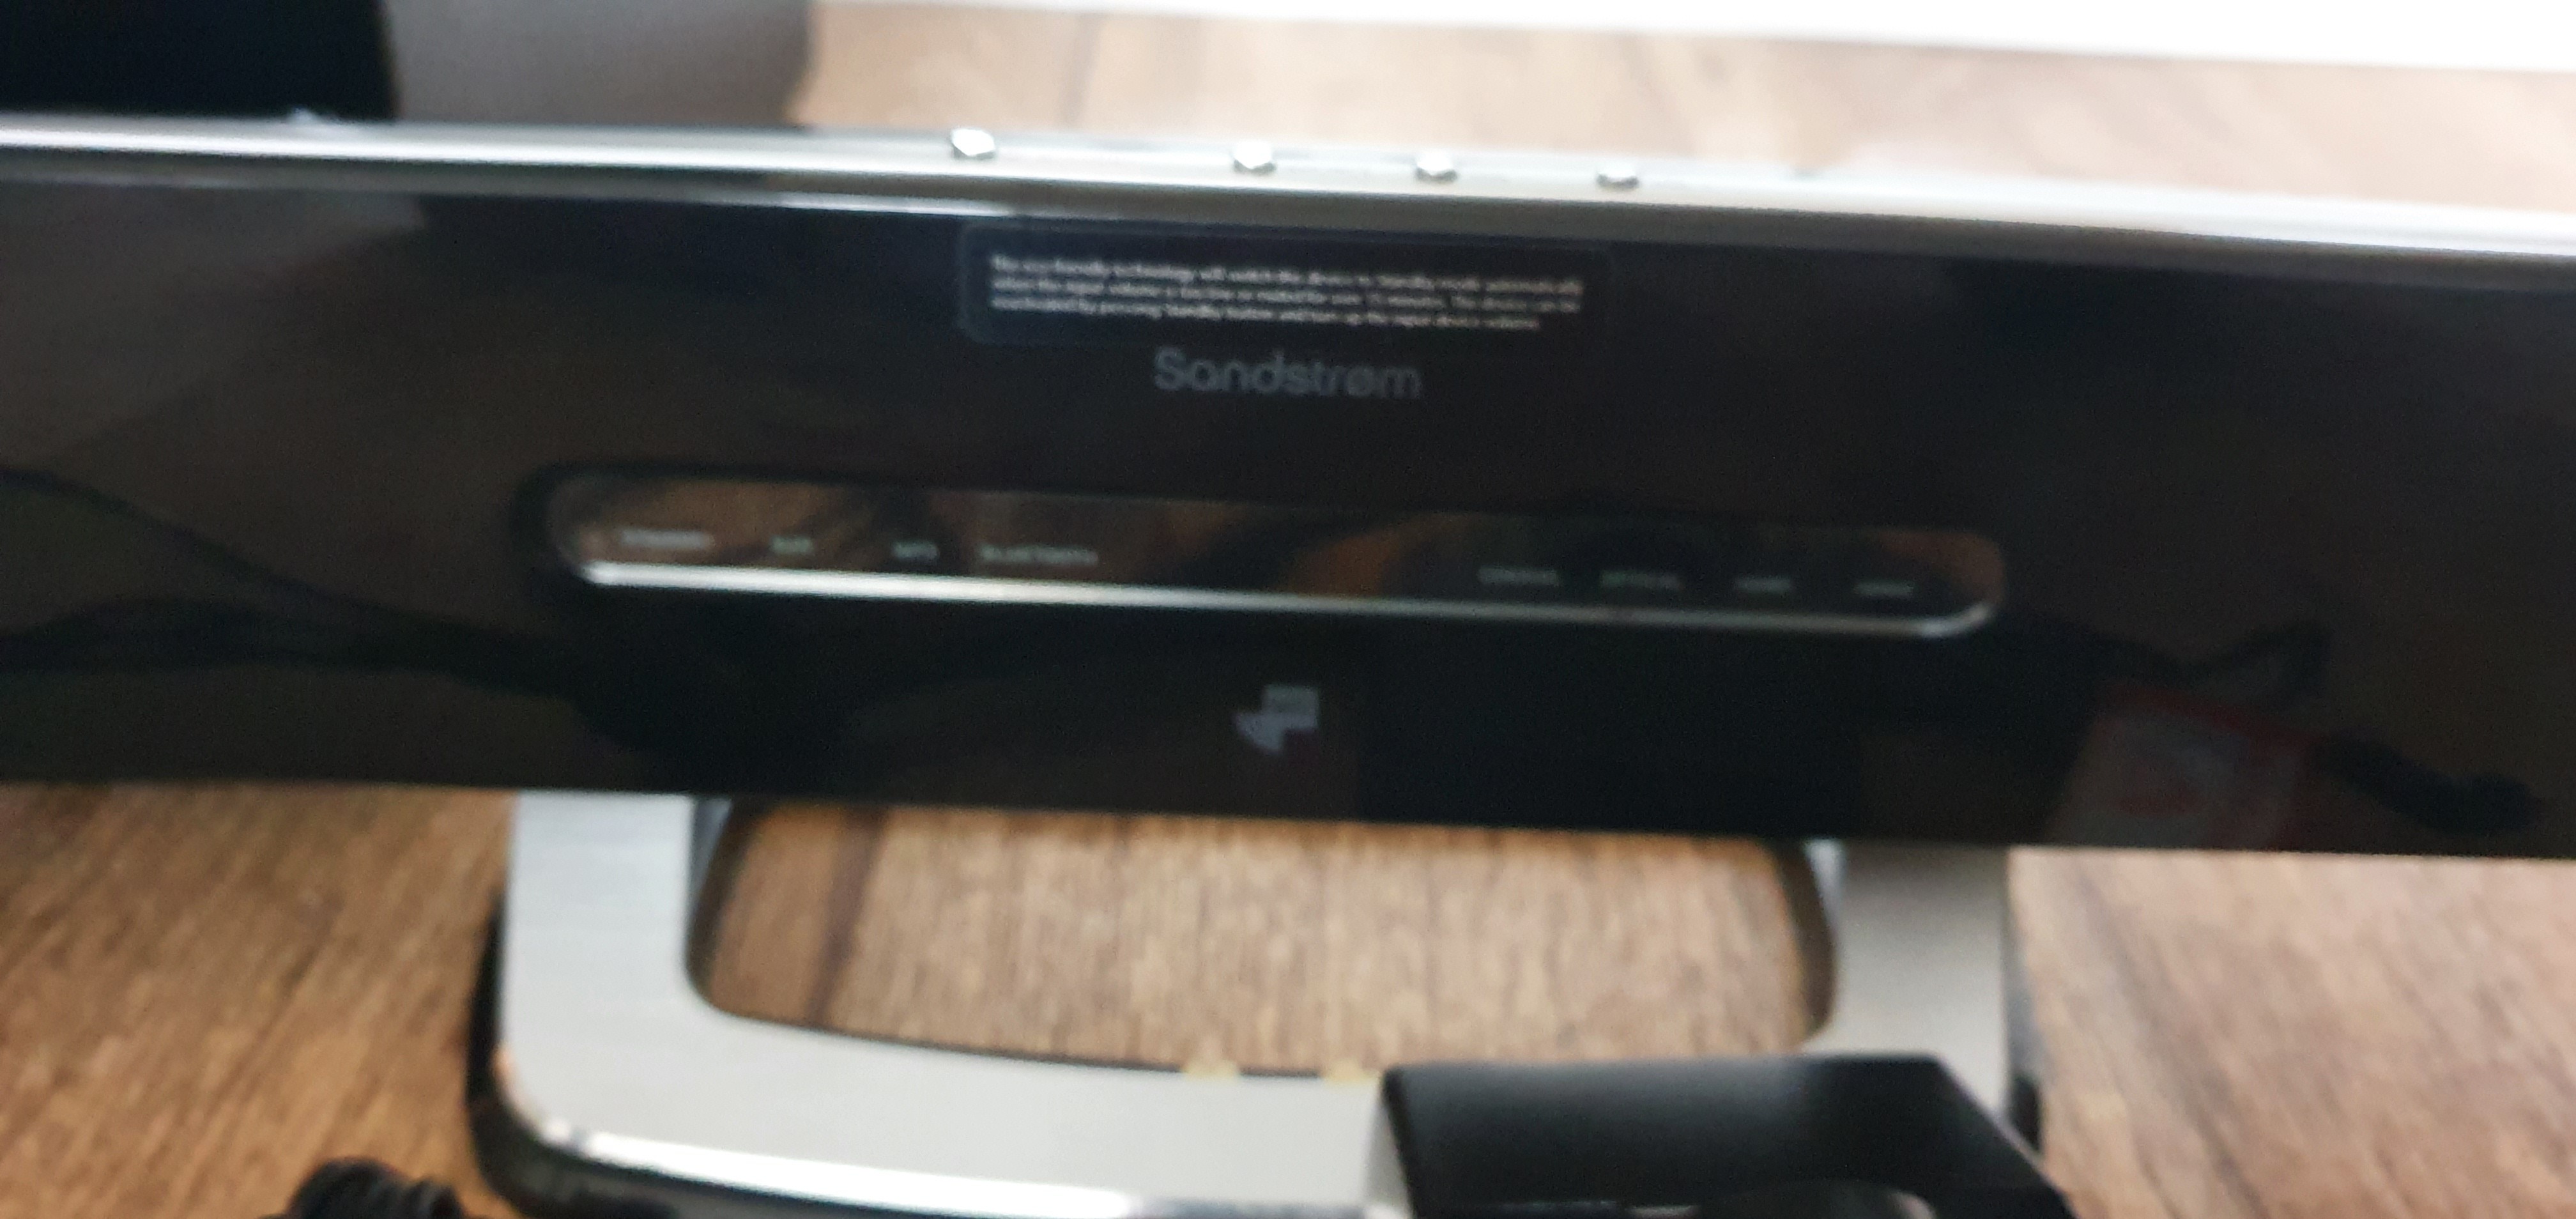 sandstrom soundbar